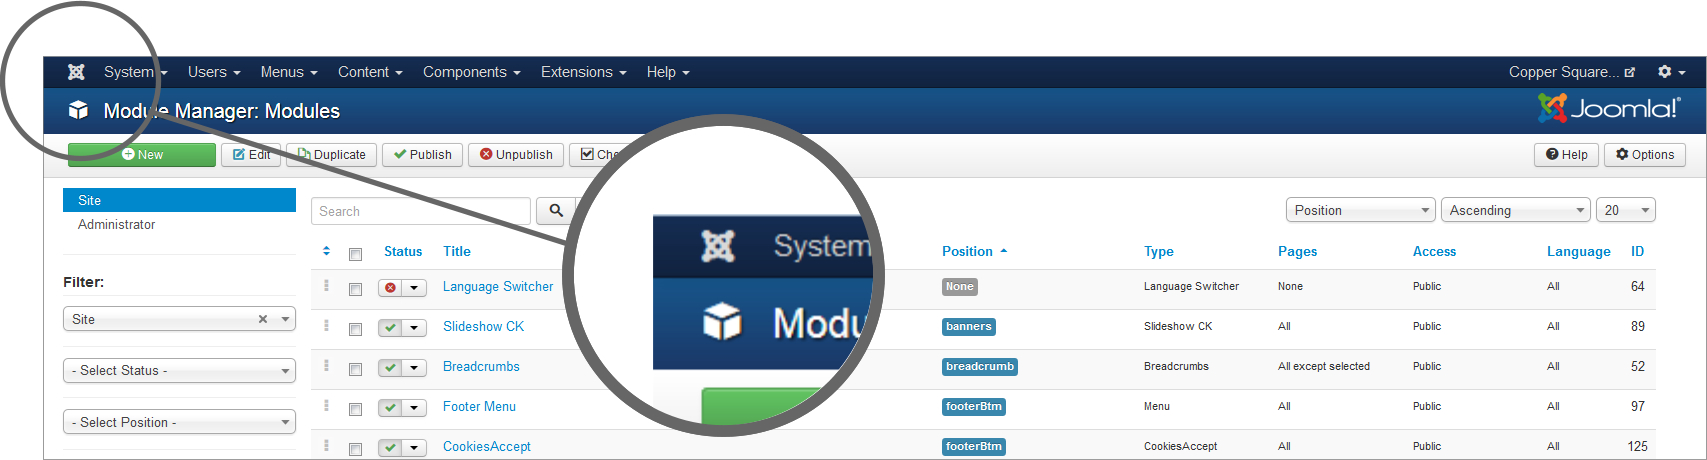 Joomla-Return-to-admin-panel-icon